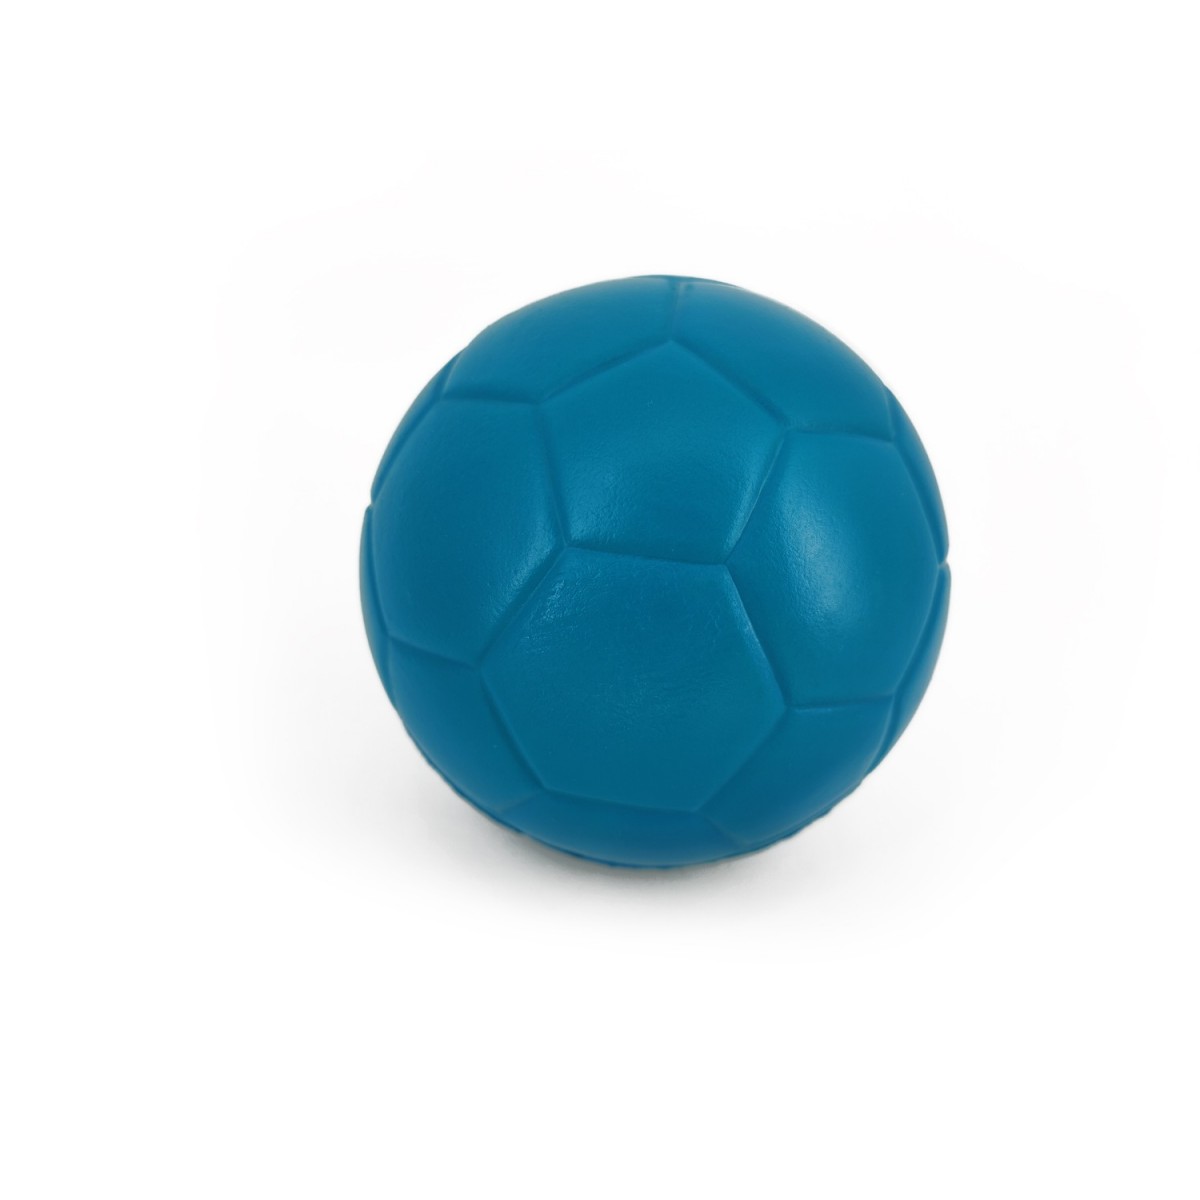 Ballon de football : Netsportique développe des top produits